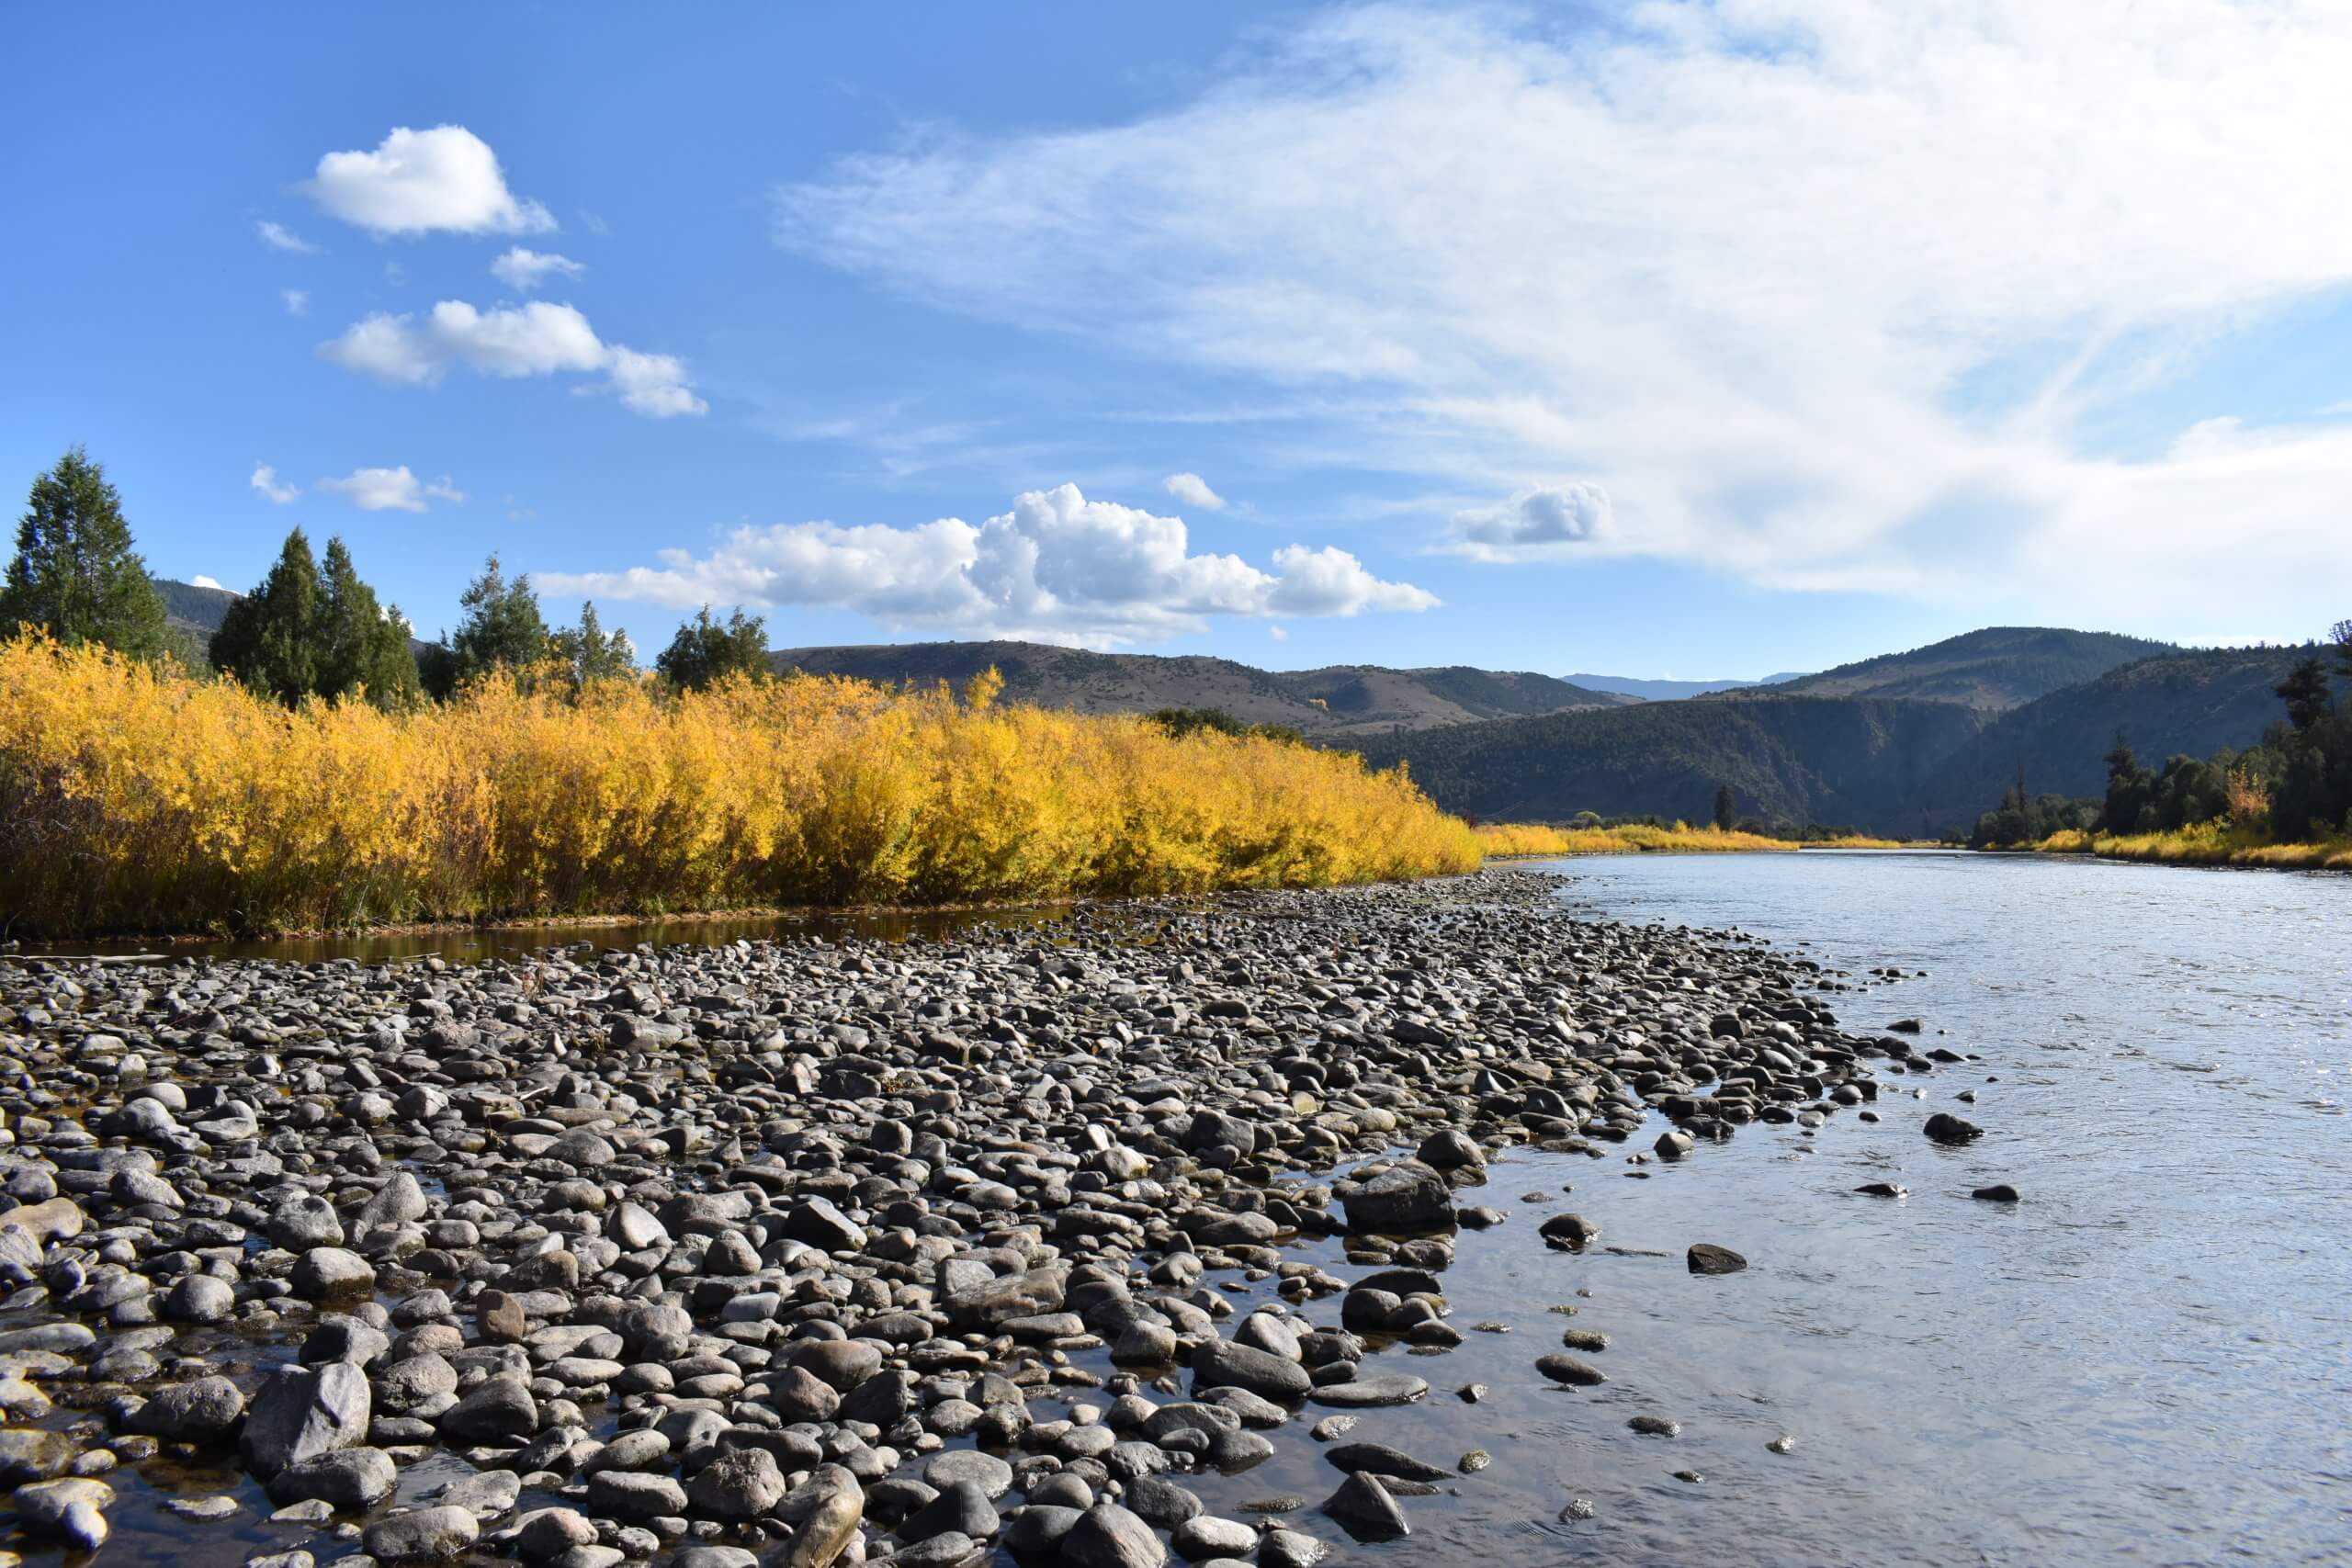 Upper Colorado river bank in the fall near Kremmling